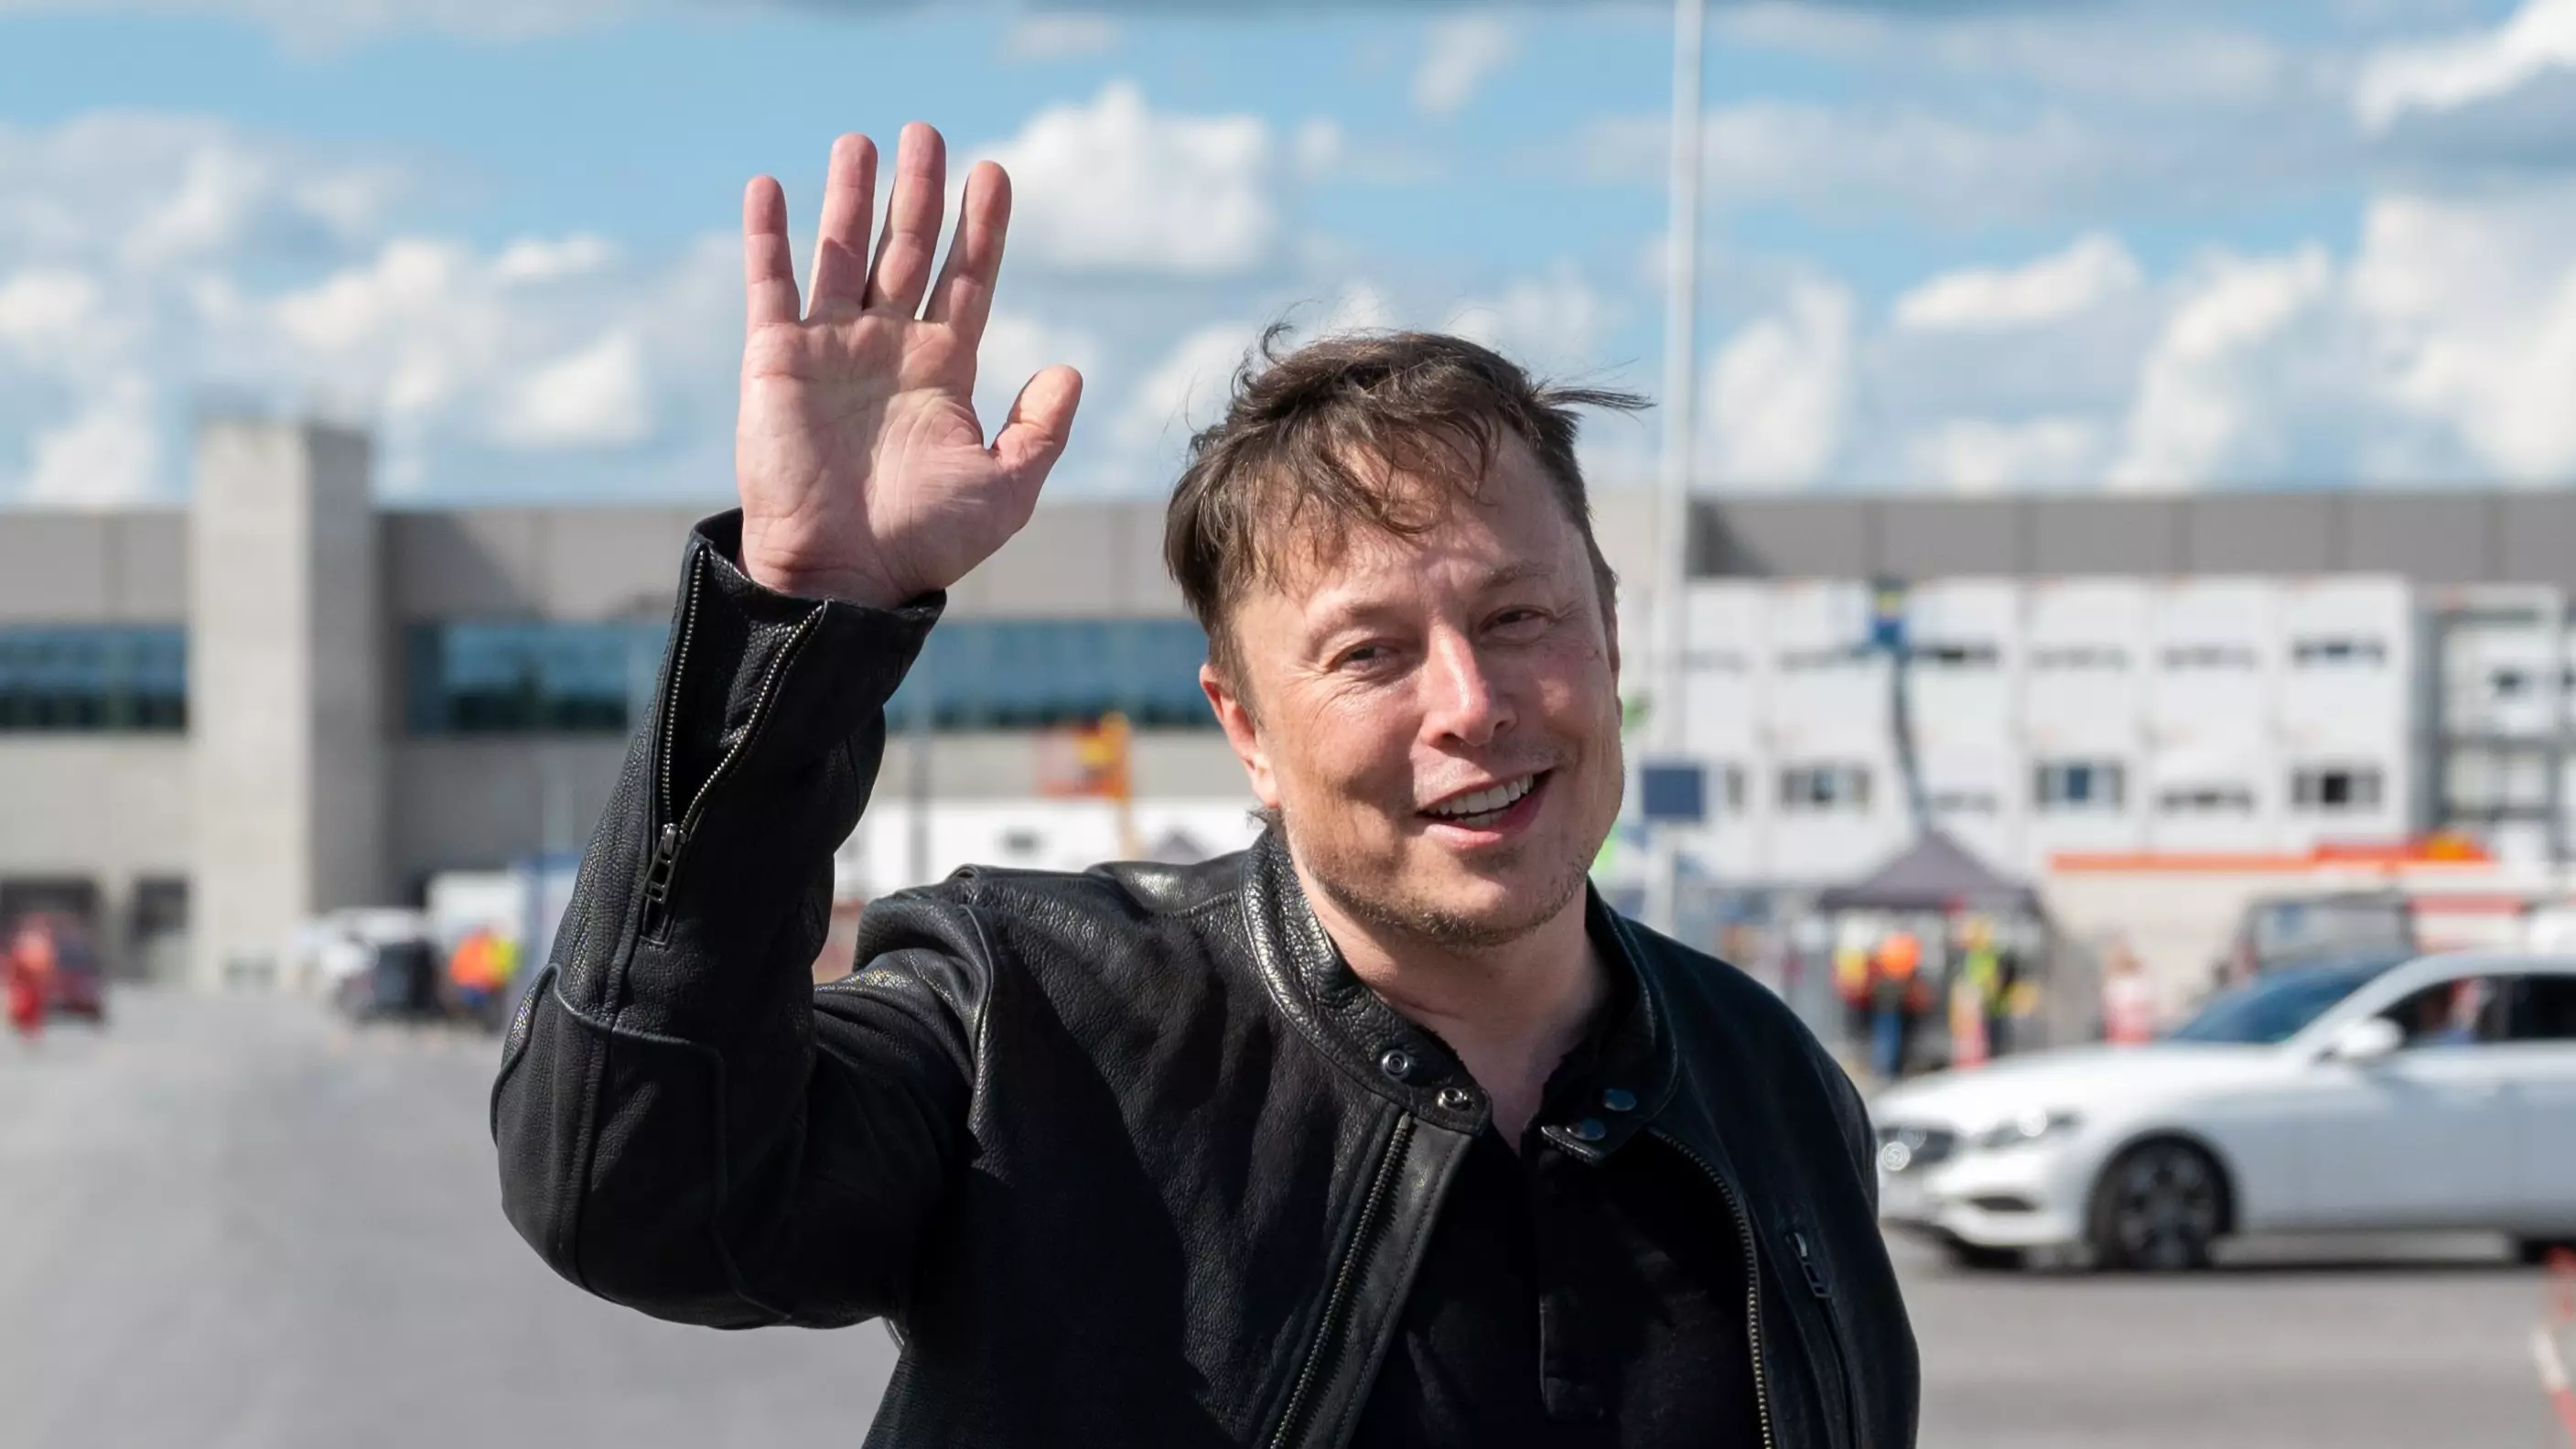 C*mRocket Cryptocurrency Surges After Elon Musk Tweet